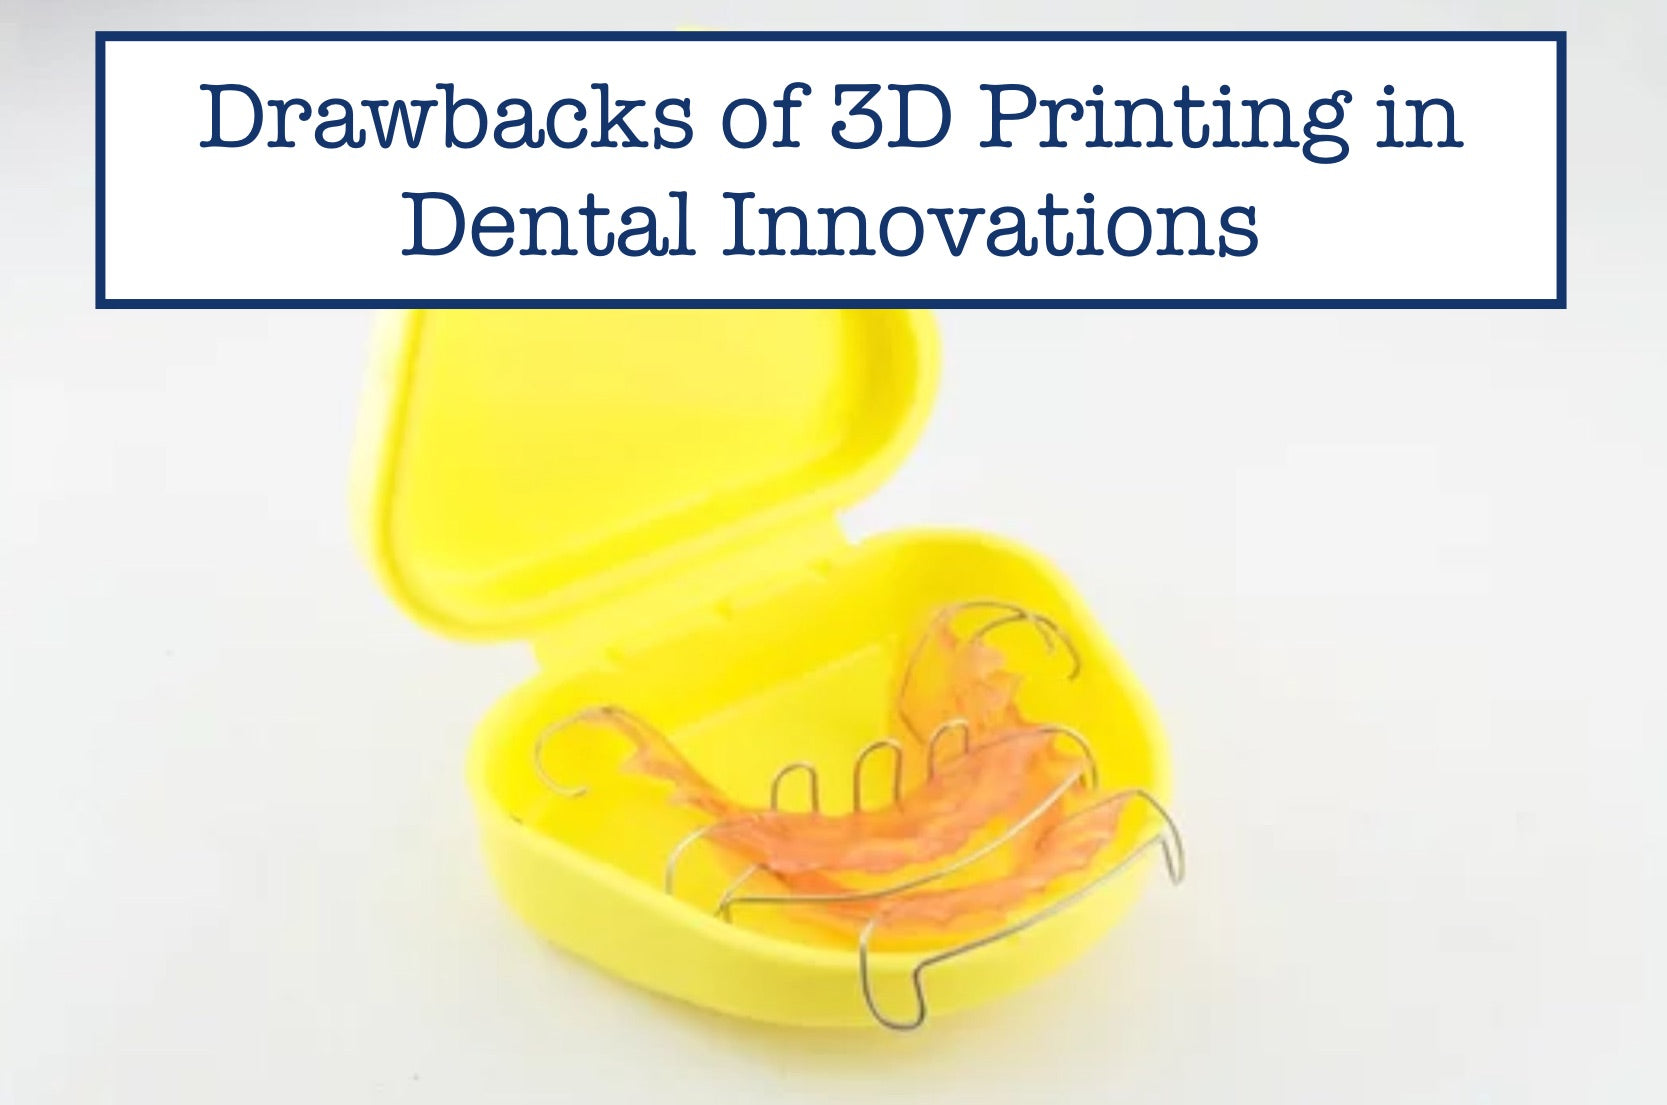 Drawbacks of 3D Printing in Dental Innovations